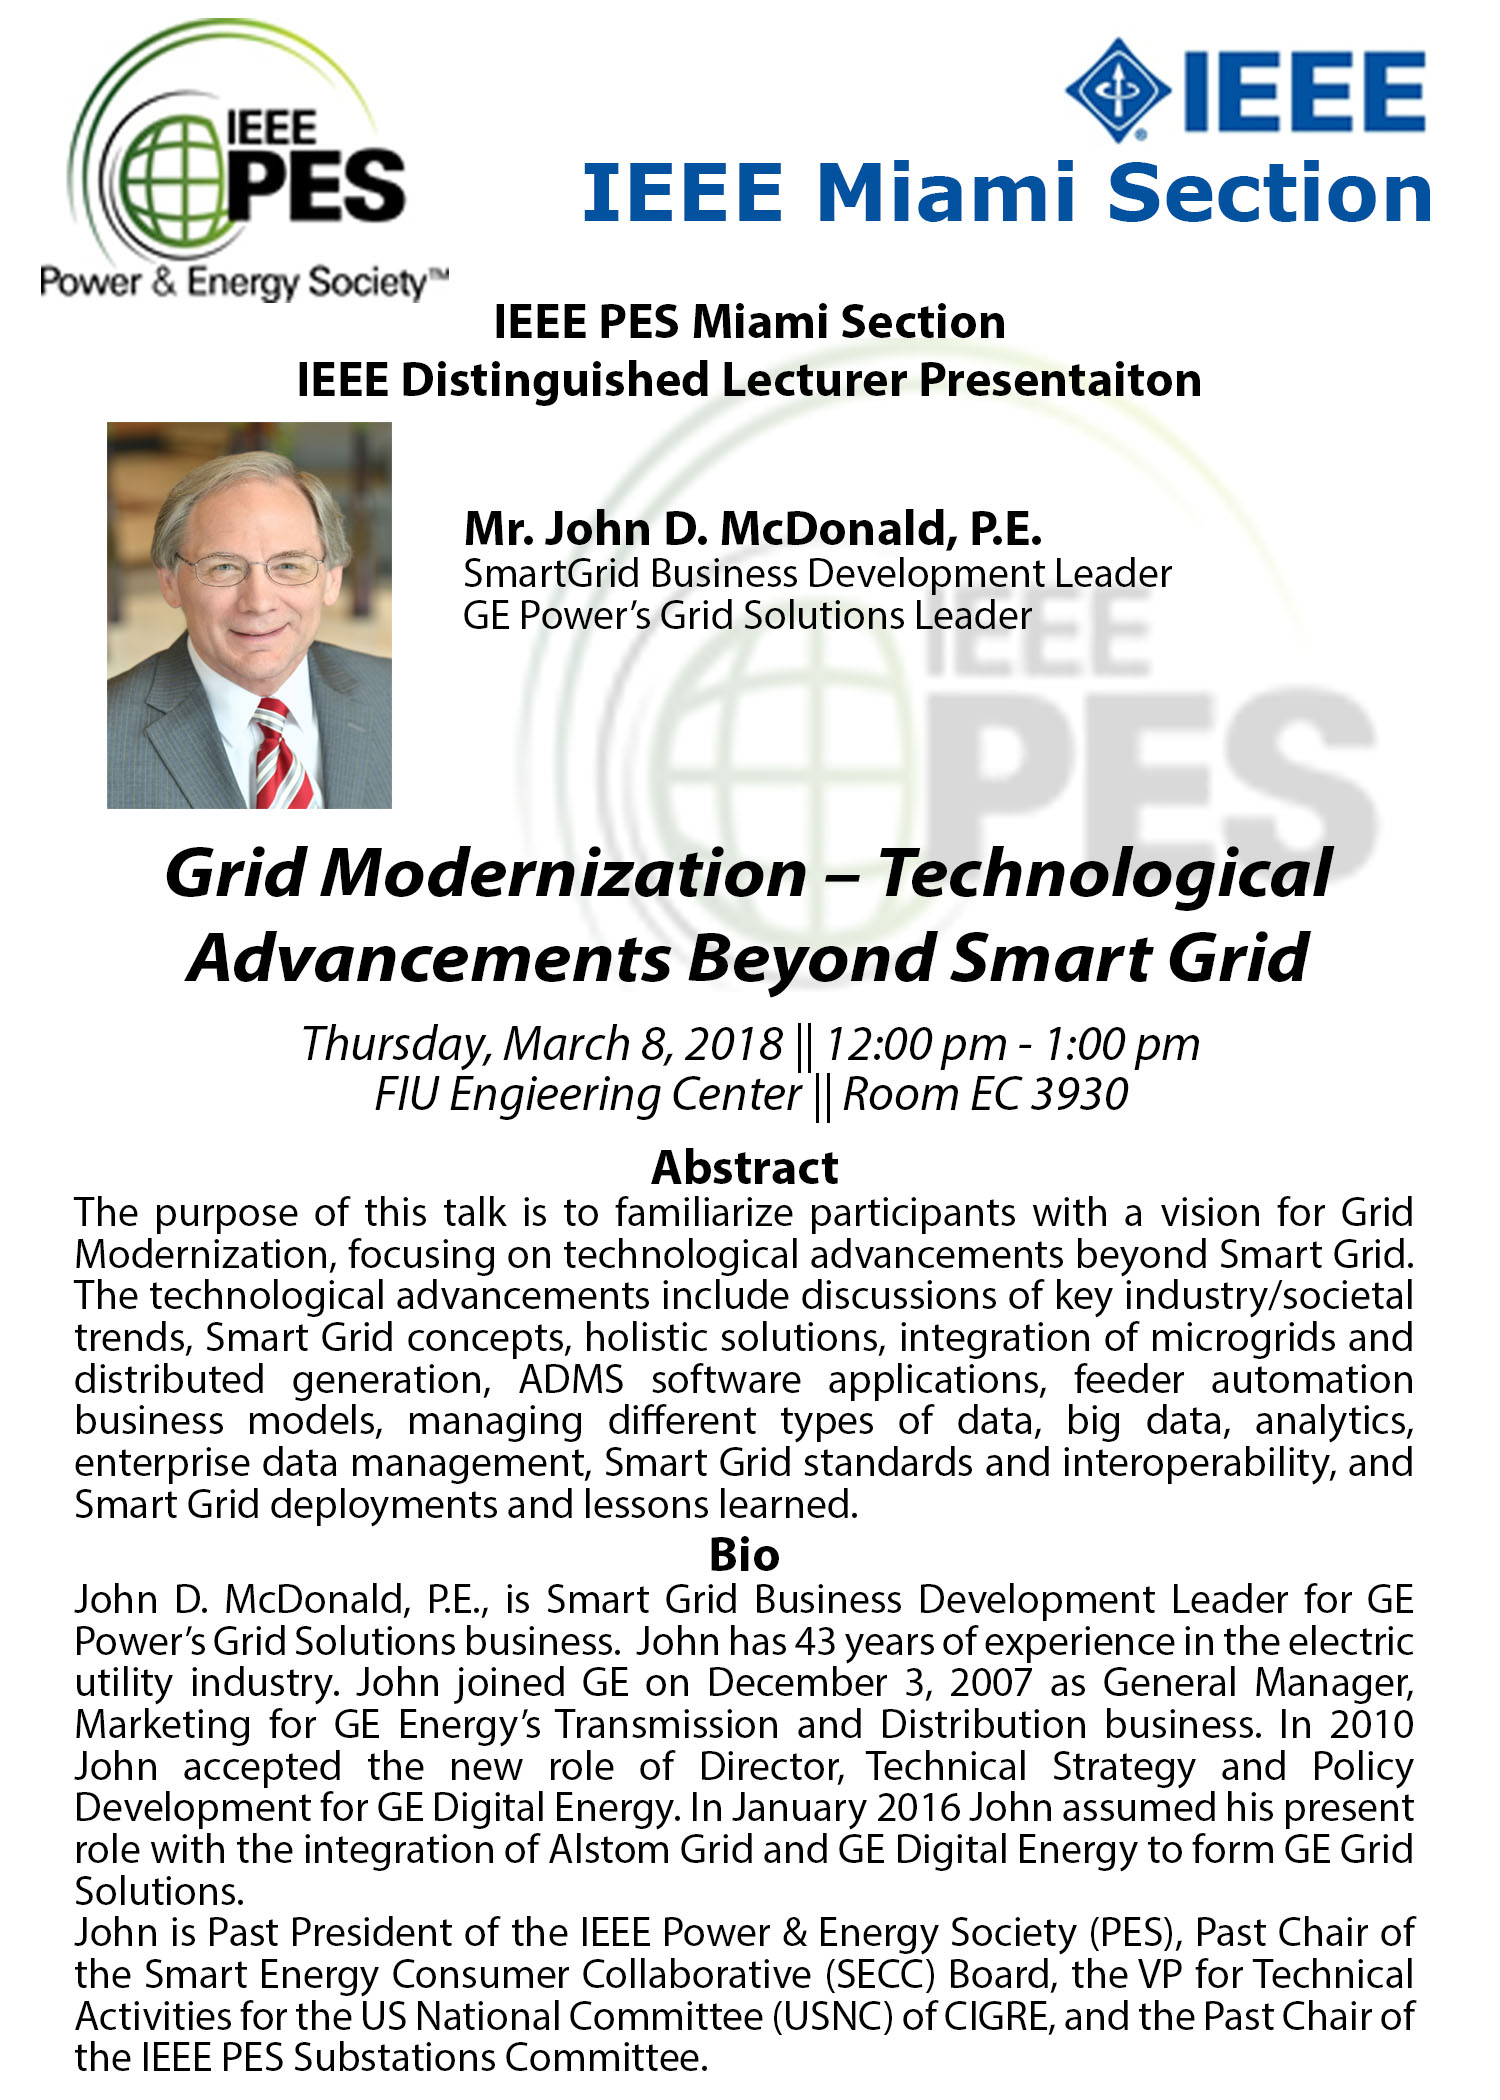 Grid Modernization - Technological Advancements Beyond Smart Grid